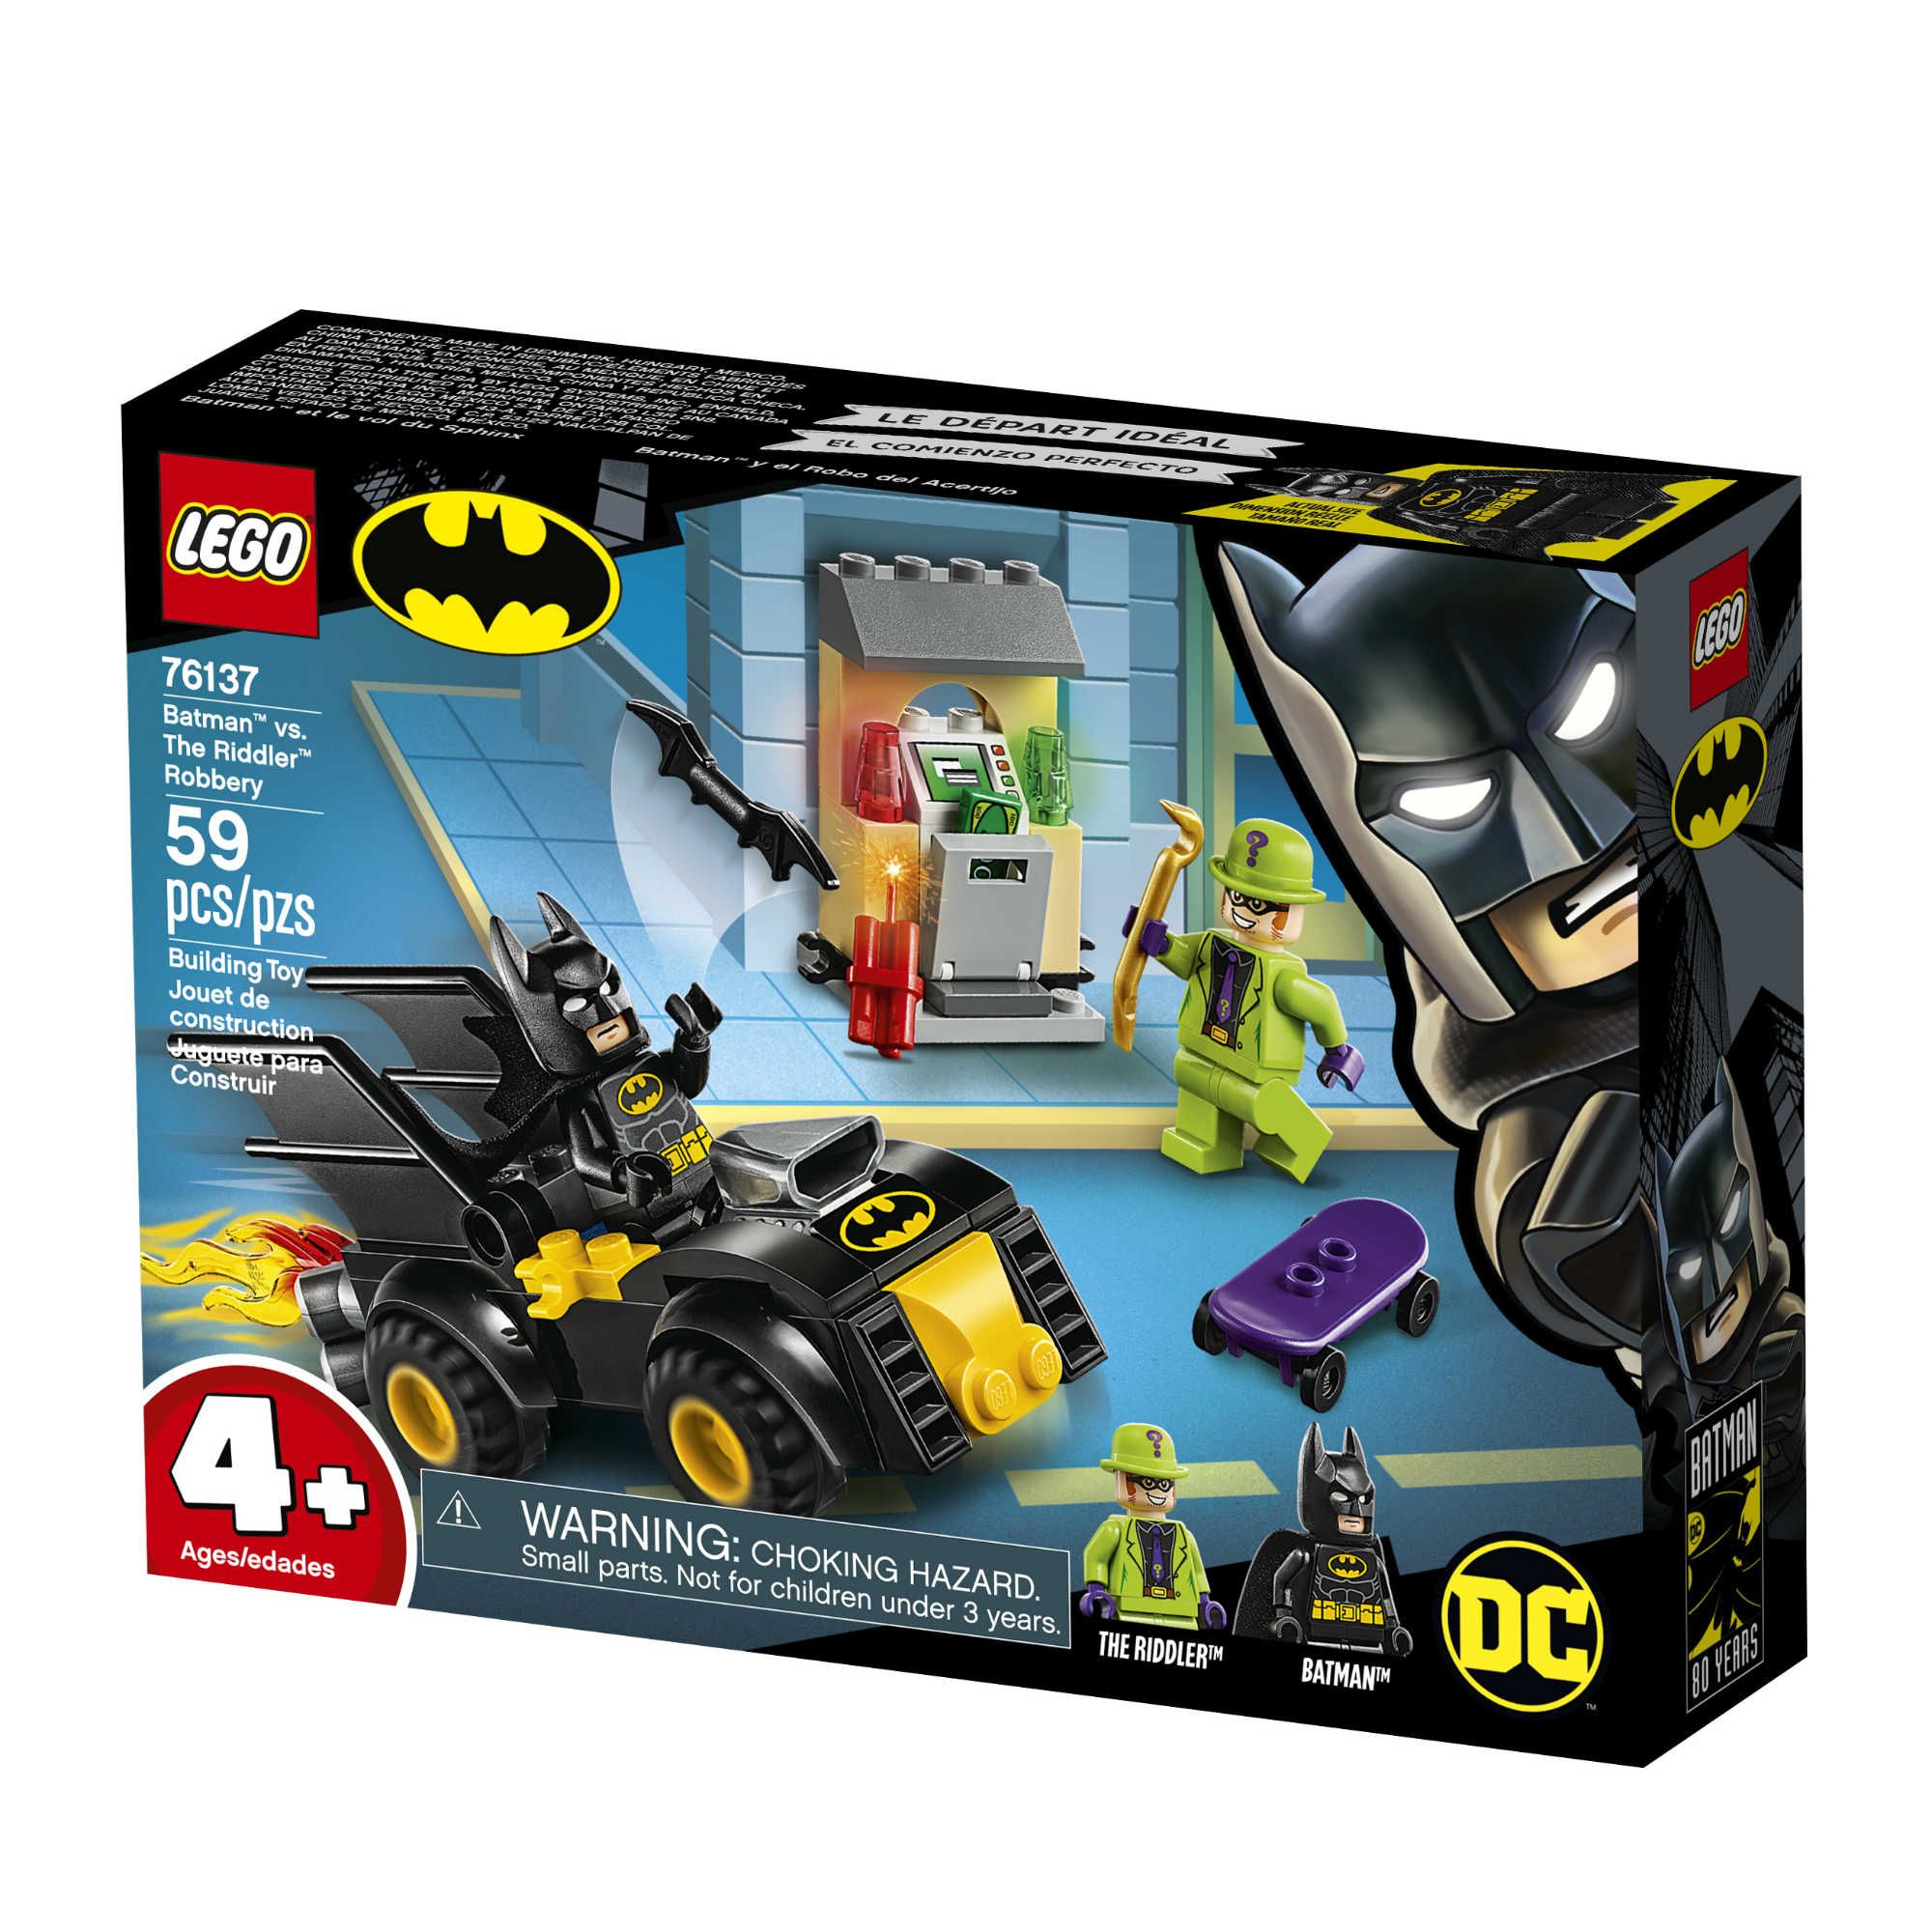 LEGO Batman Sets Batman vs Riddler Robbery Box